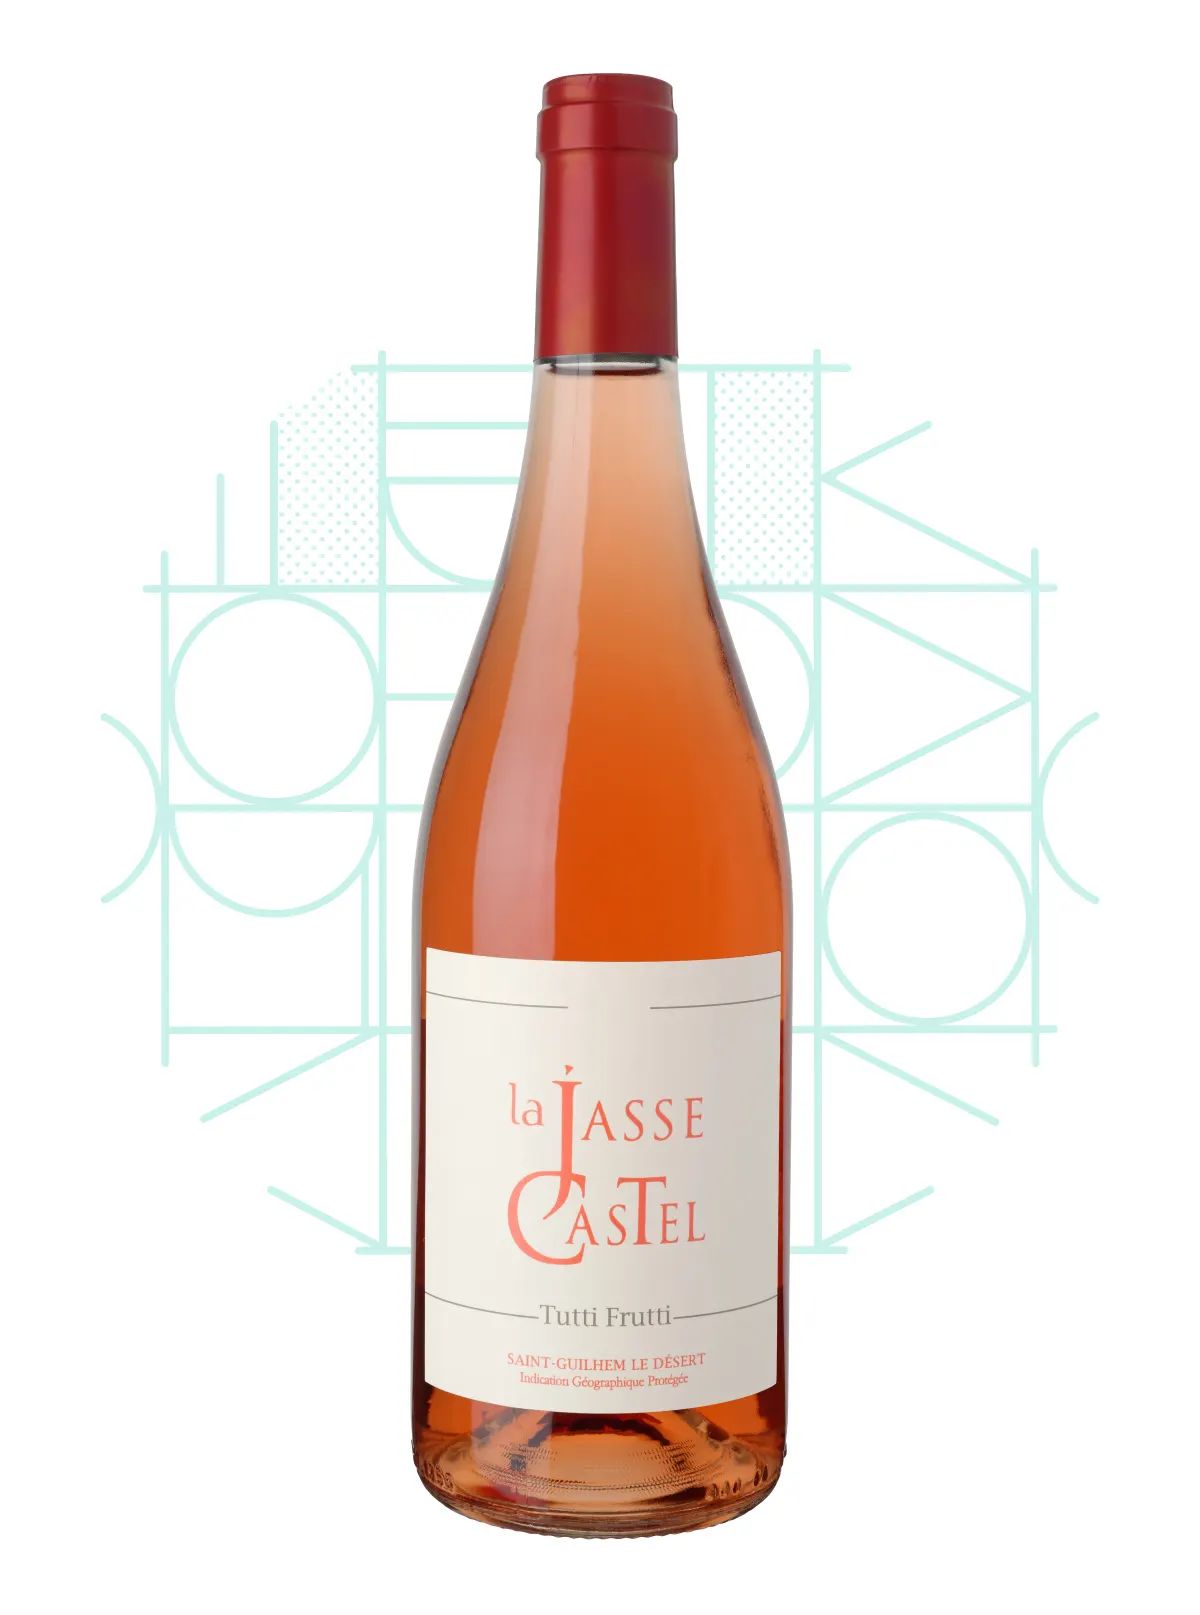 La Jasse Castel - Vin rosé bio - Cuvée Tutti Frutti